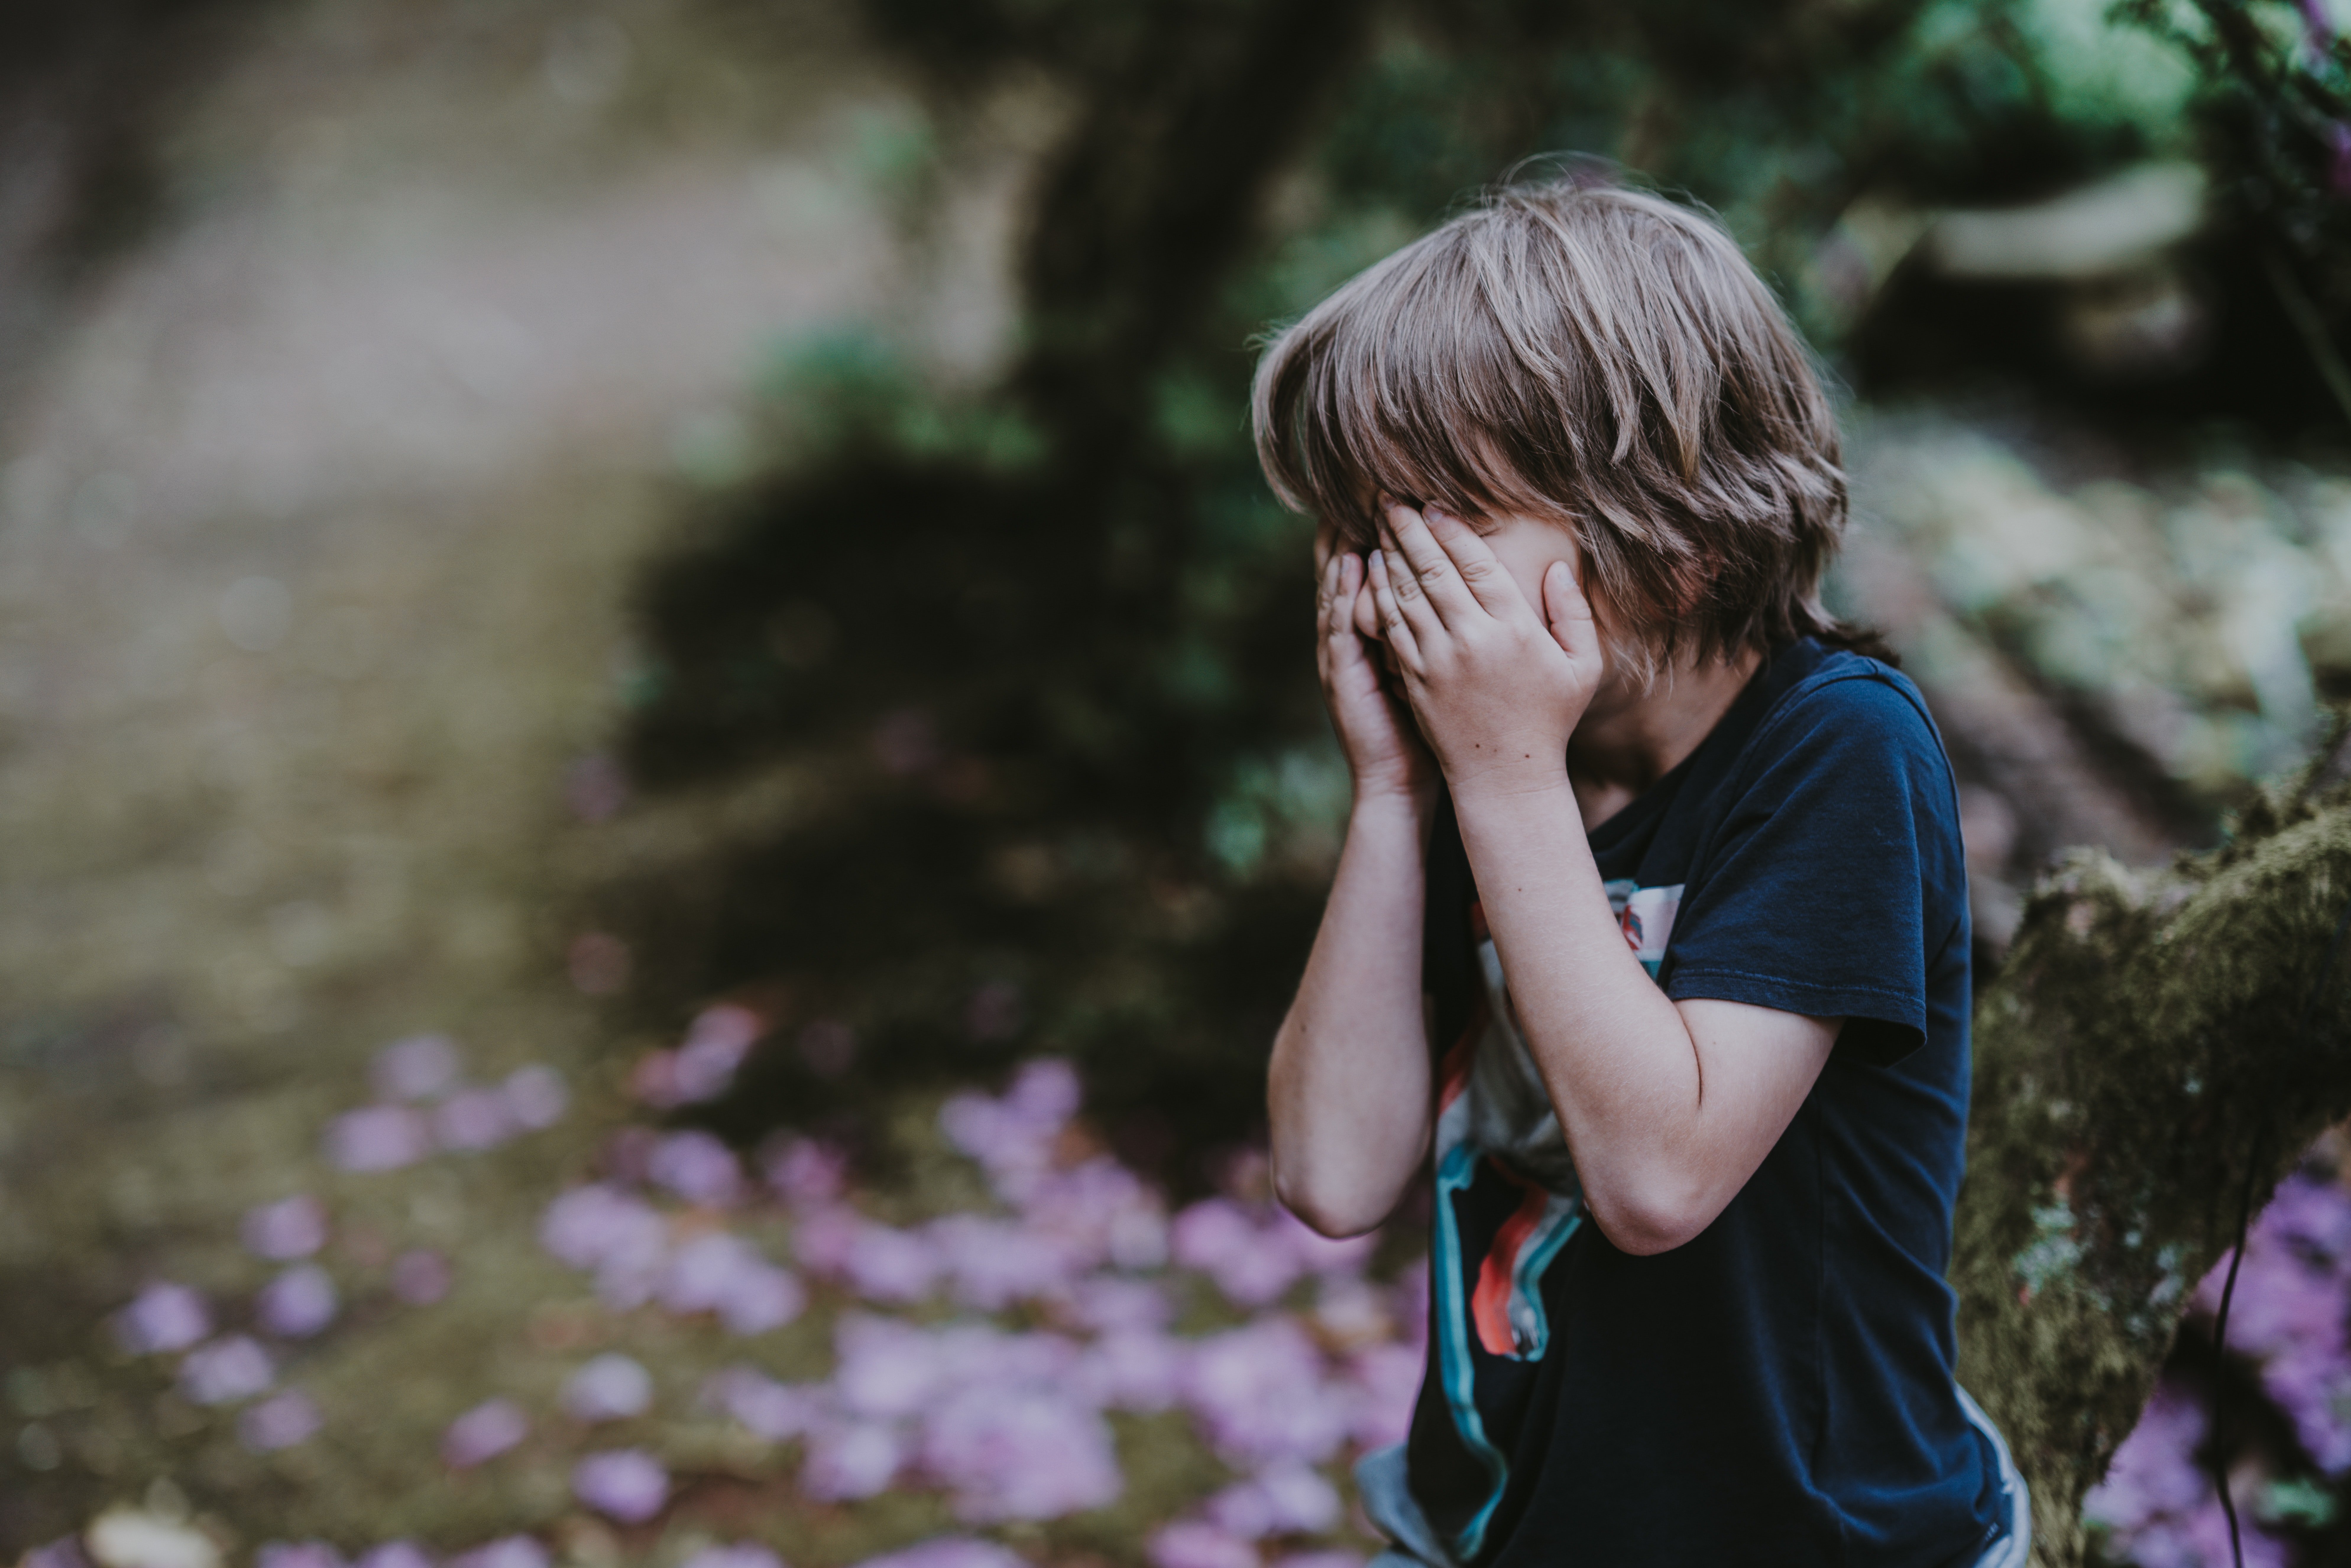 A child crying | Source: Unsplash